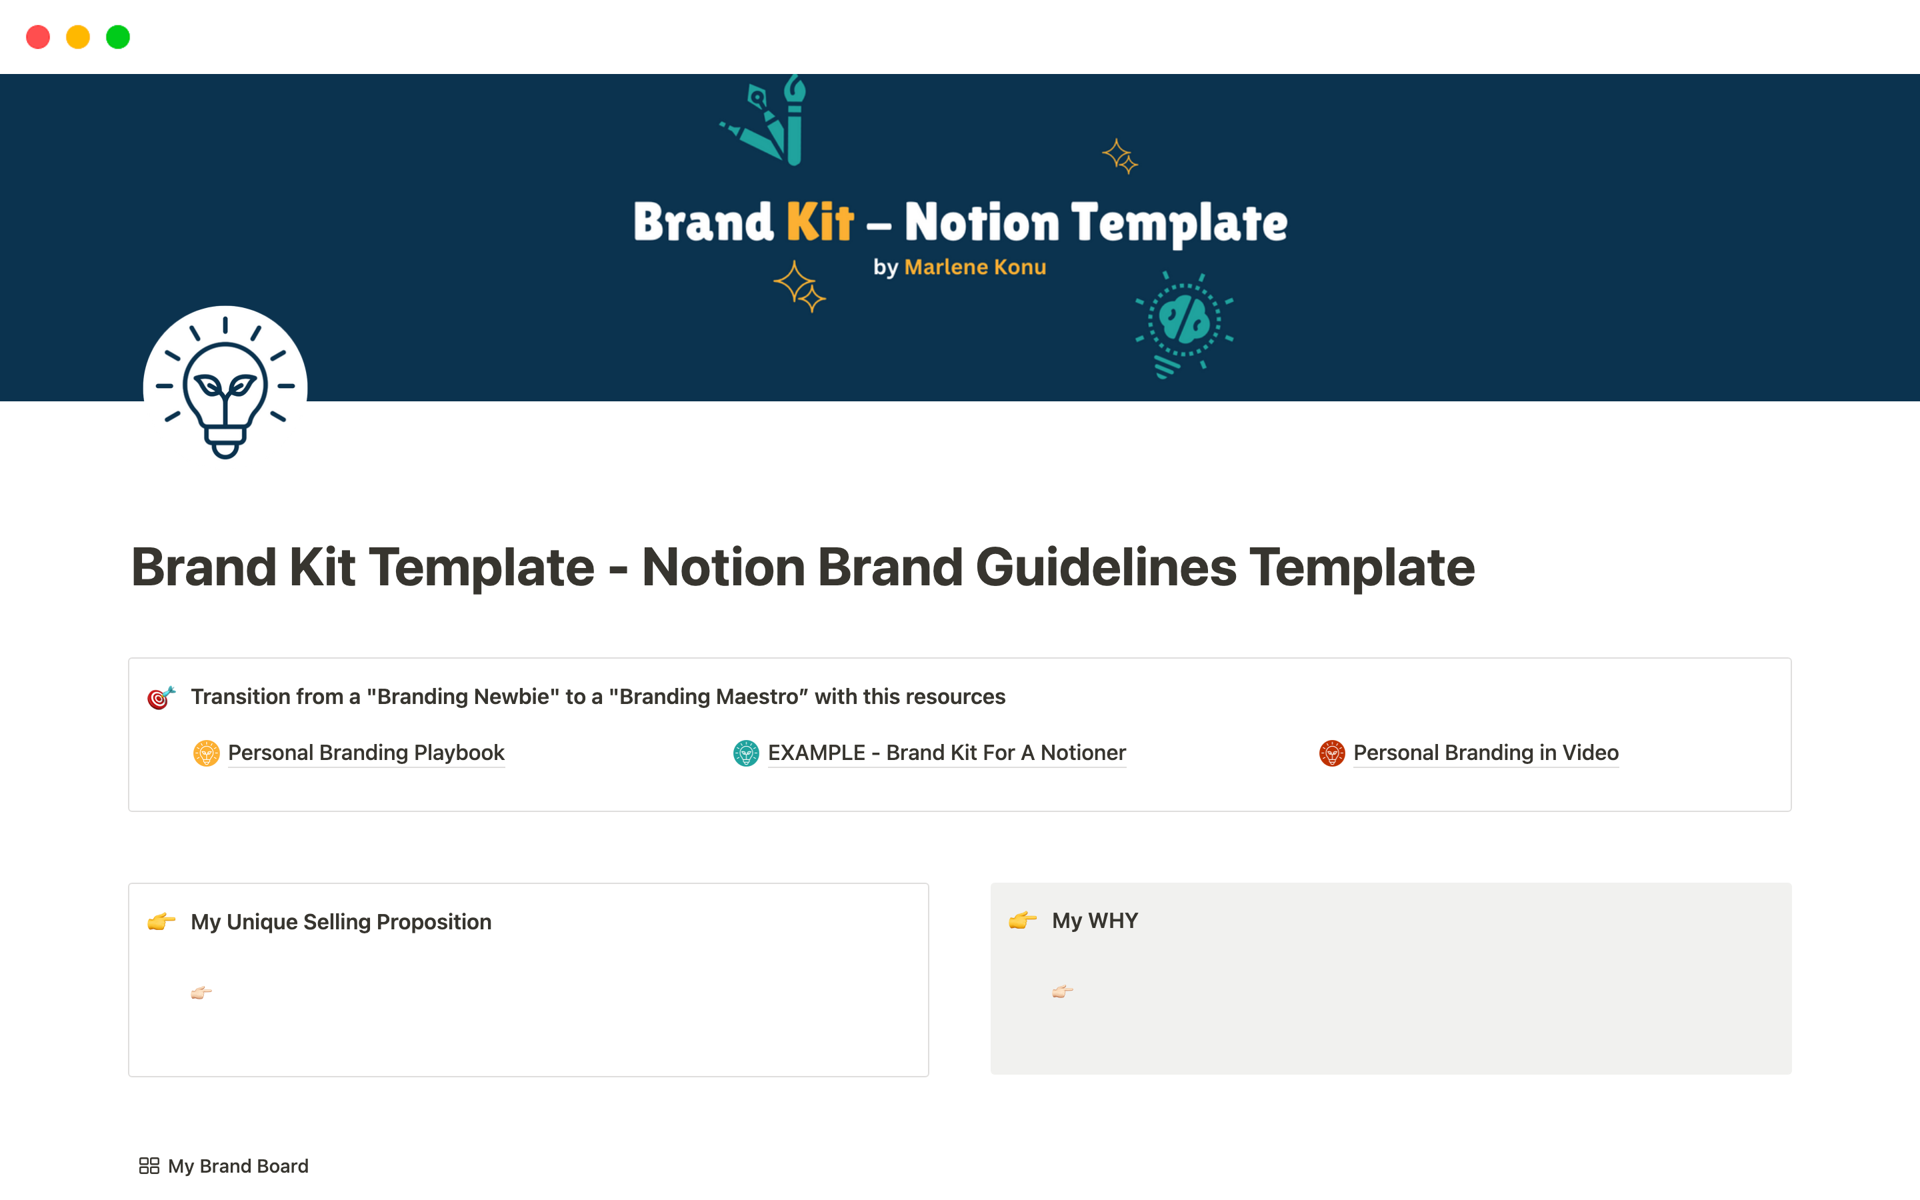 Aperçu du modèle de Brand Kit Template - Notion Brand Guidelines Template